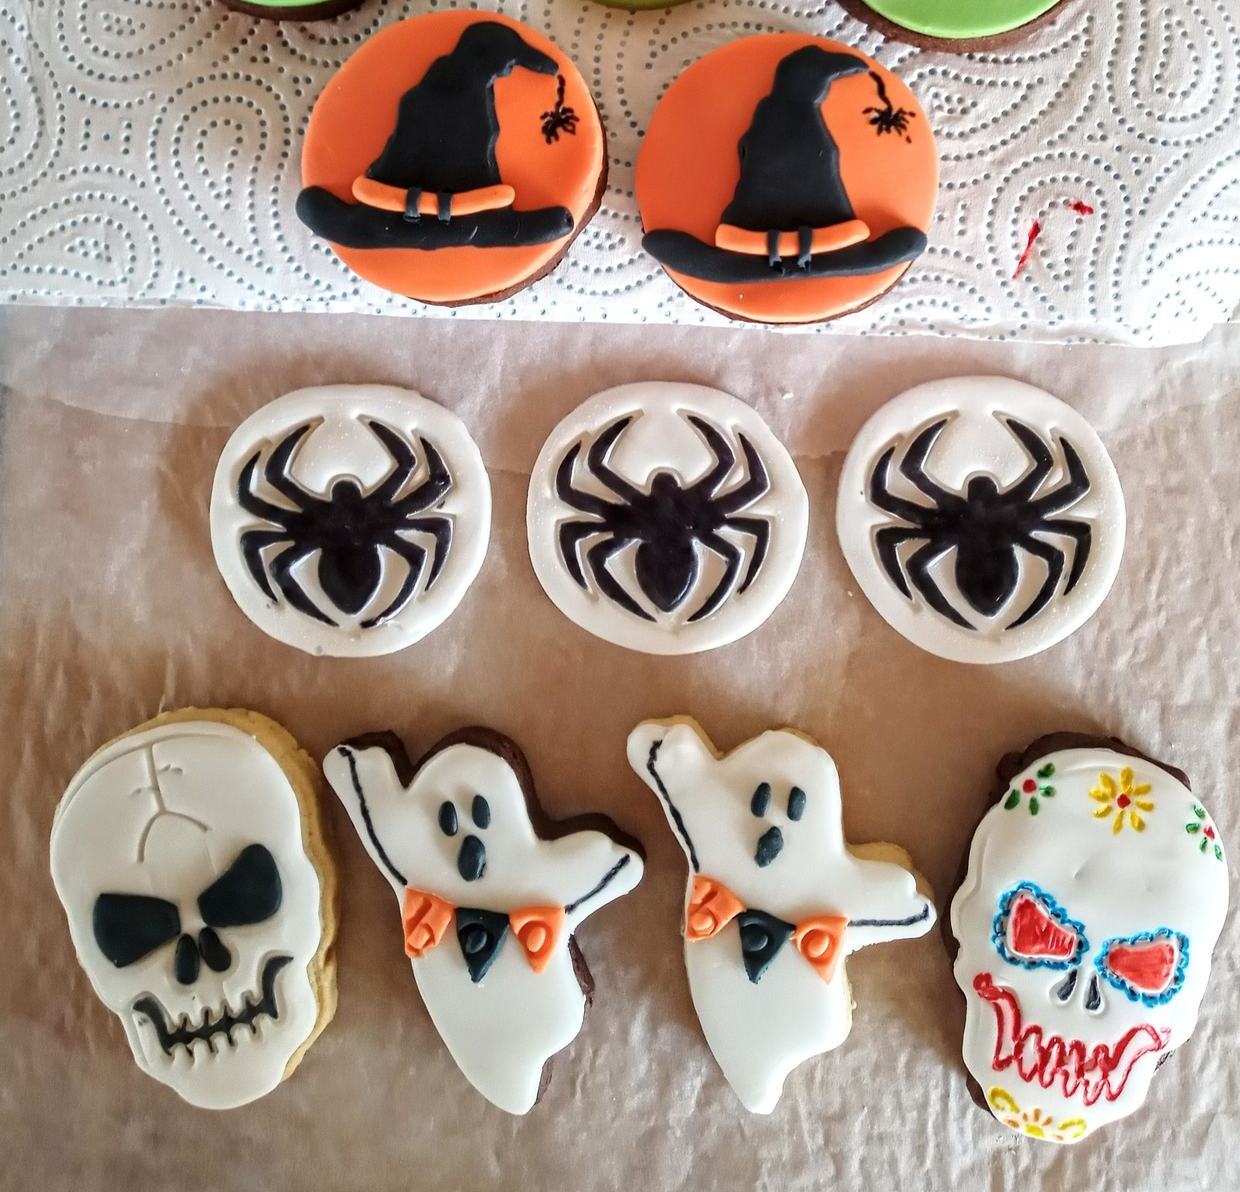 Decorated Halloween biscuits